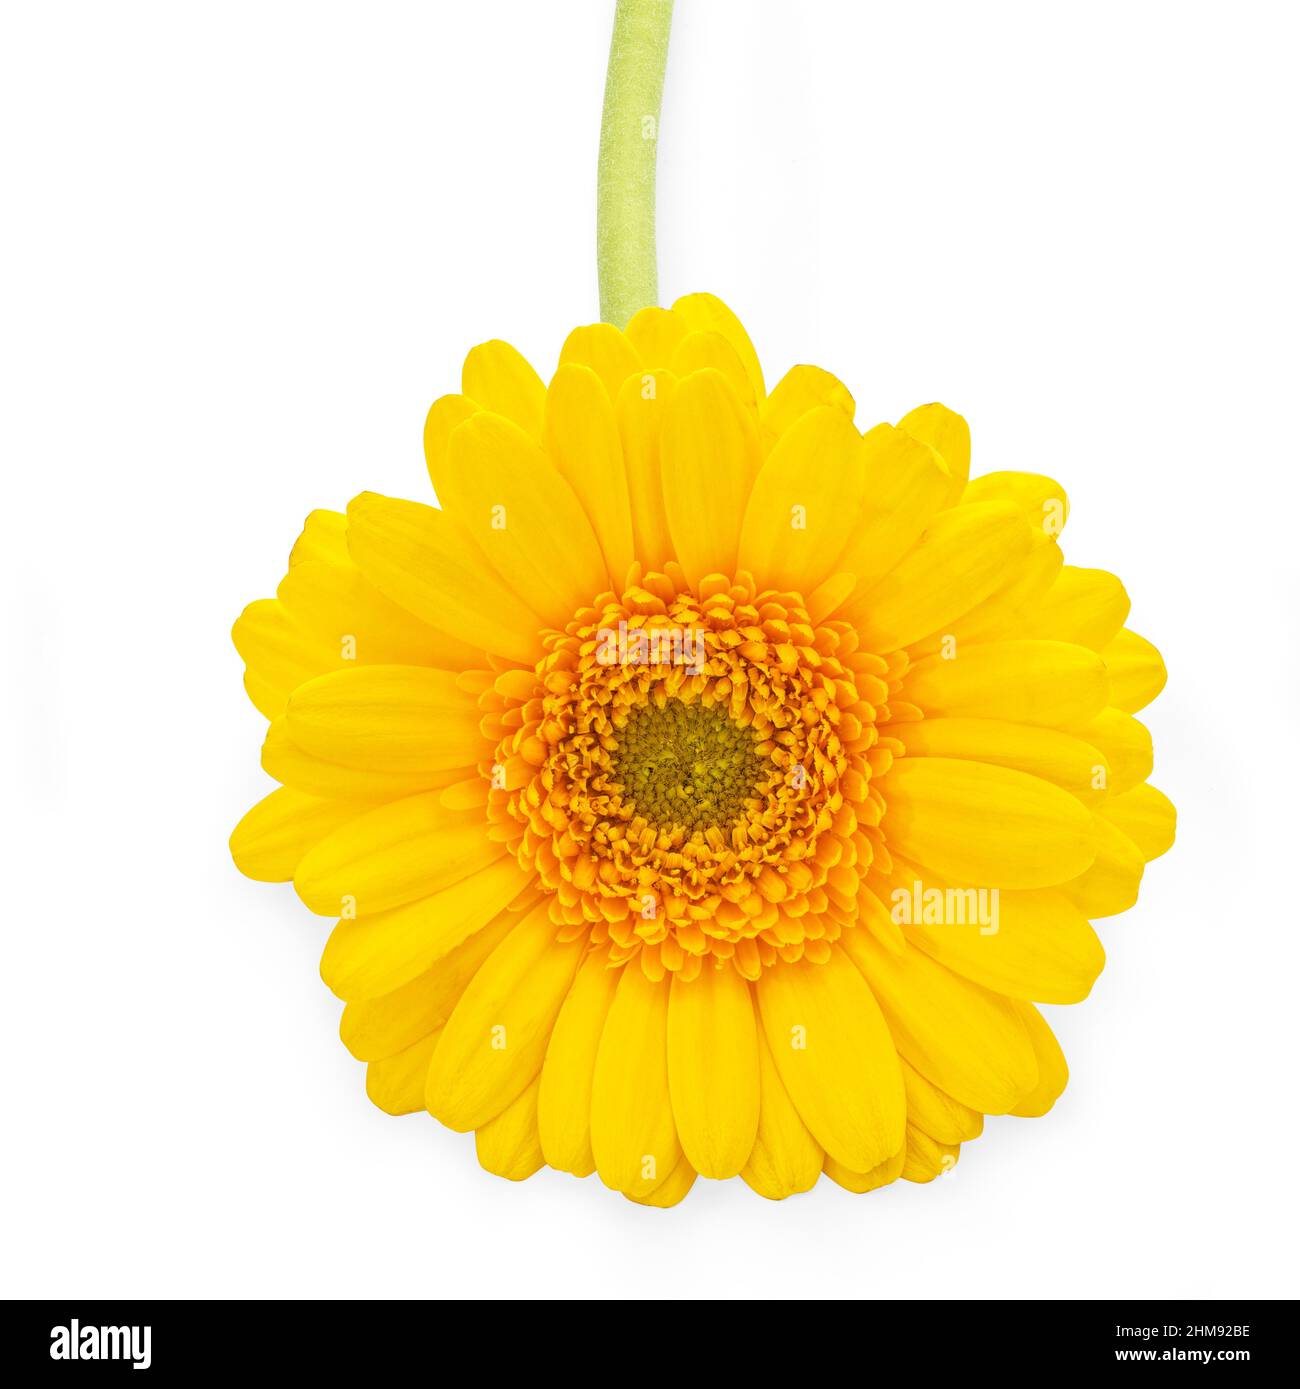 Yellow Gerbera daisy type flower on white background Stock Photo